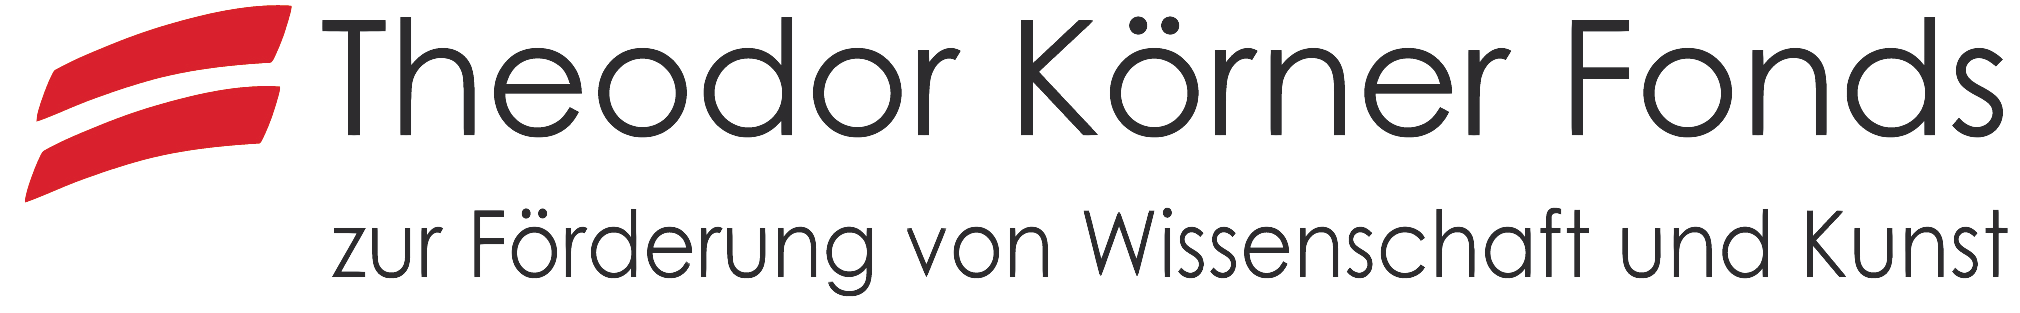 tkf logo